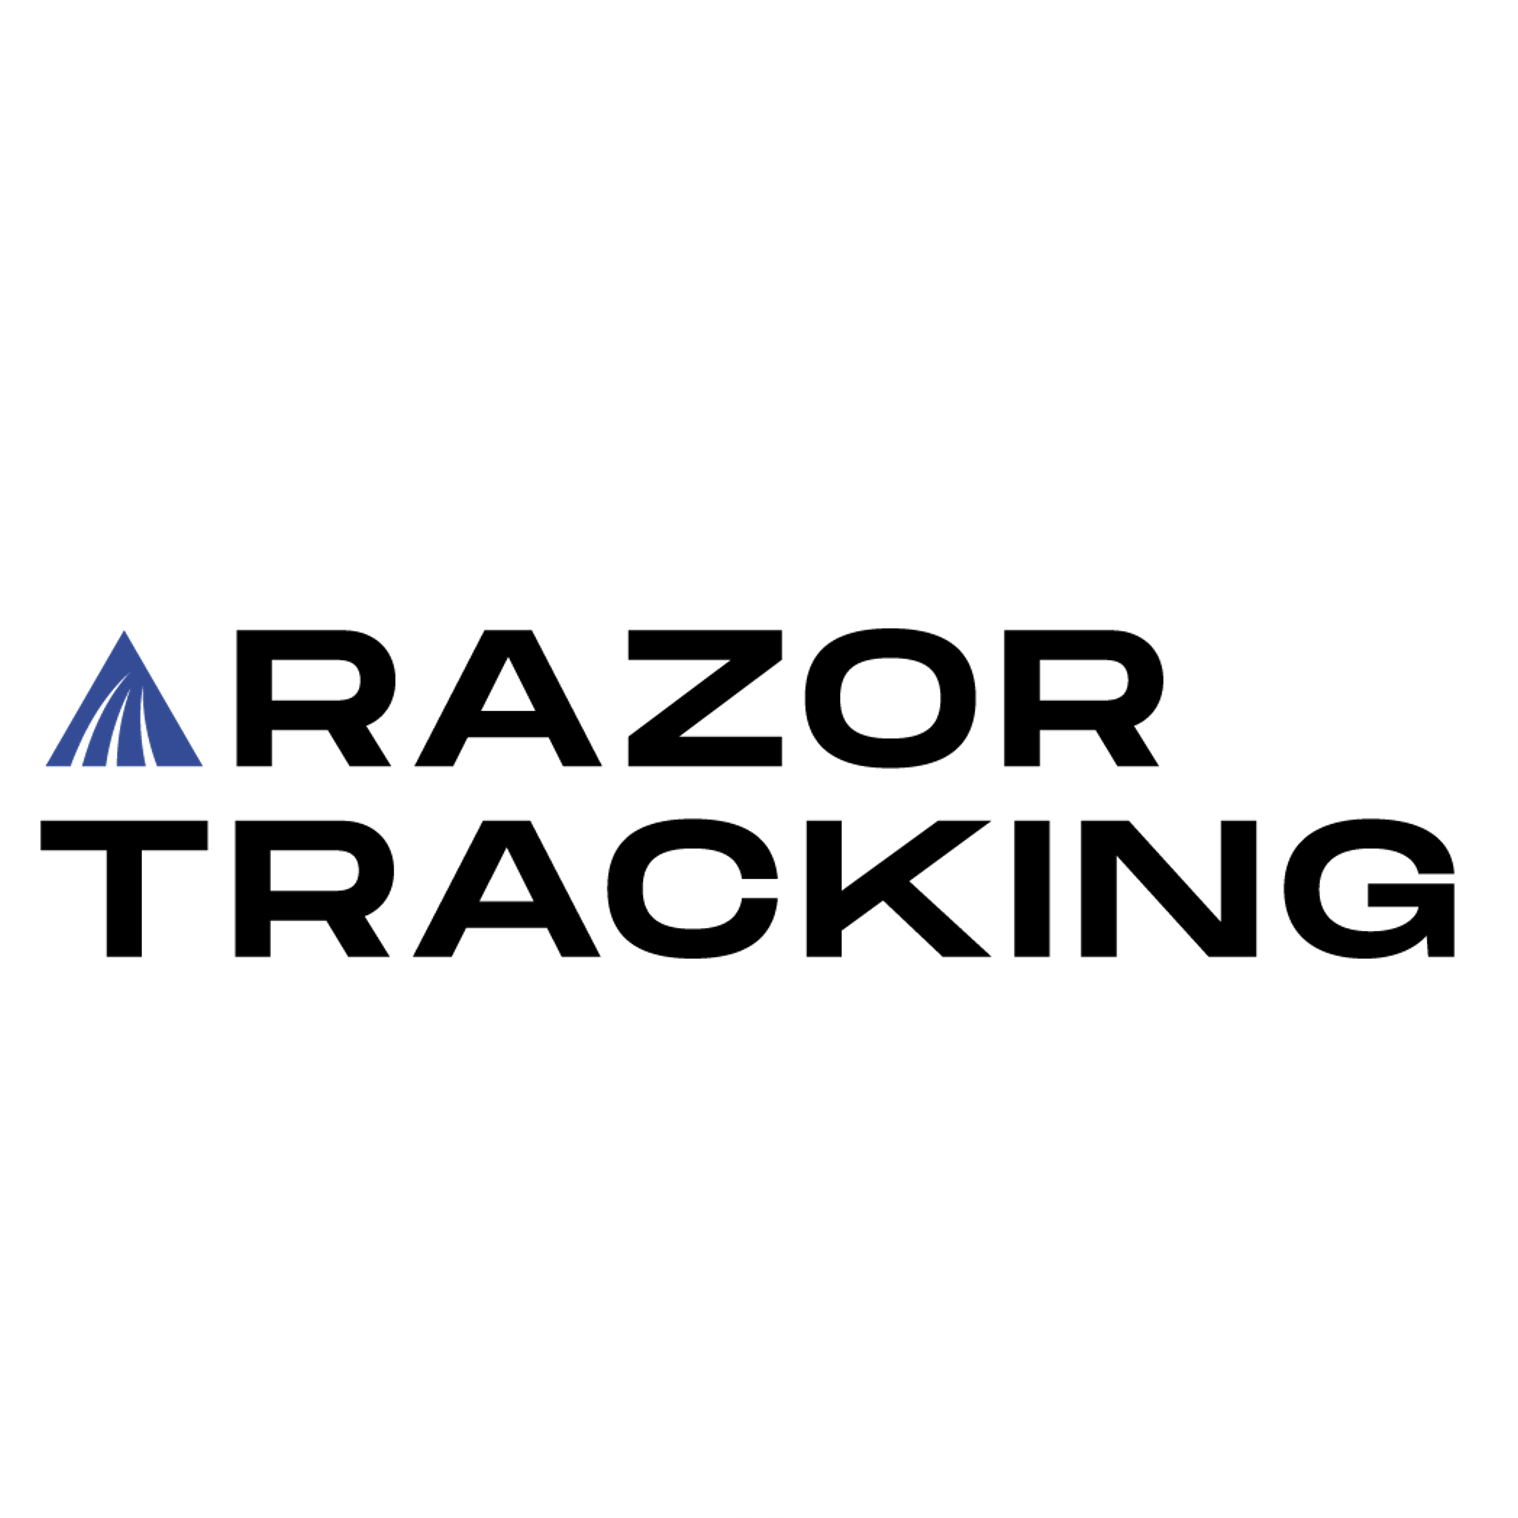 Razor Tracking